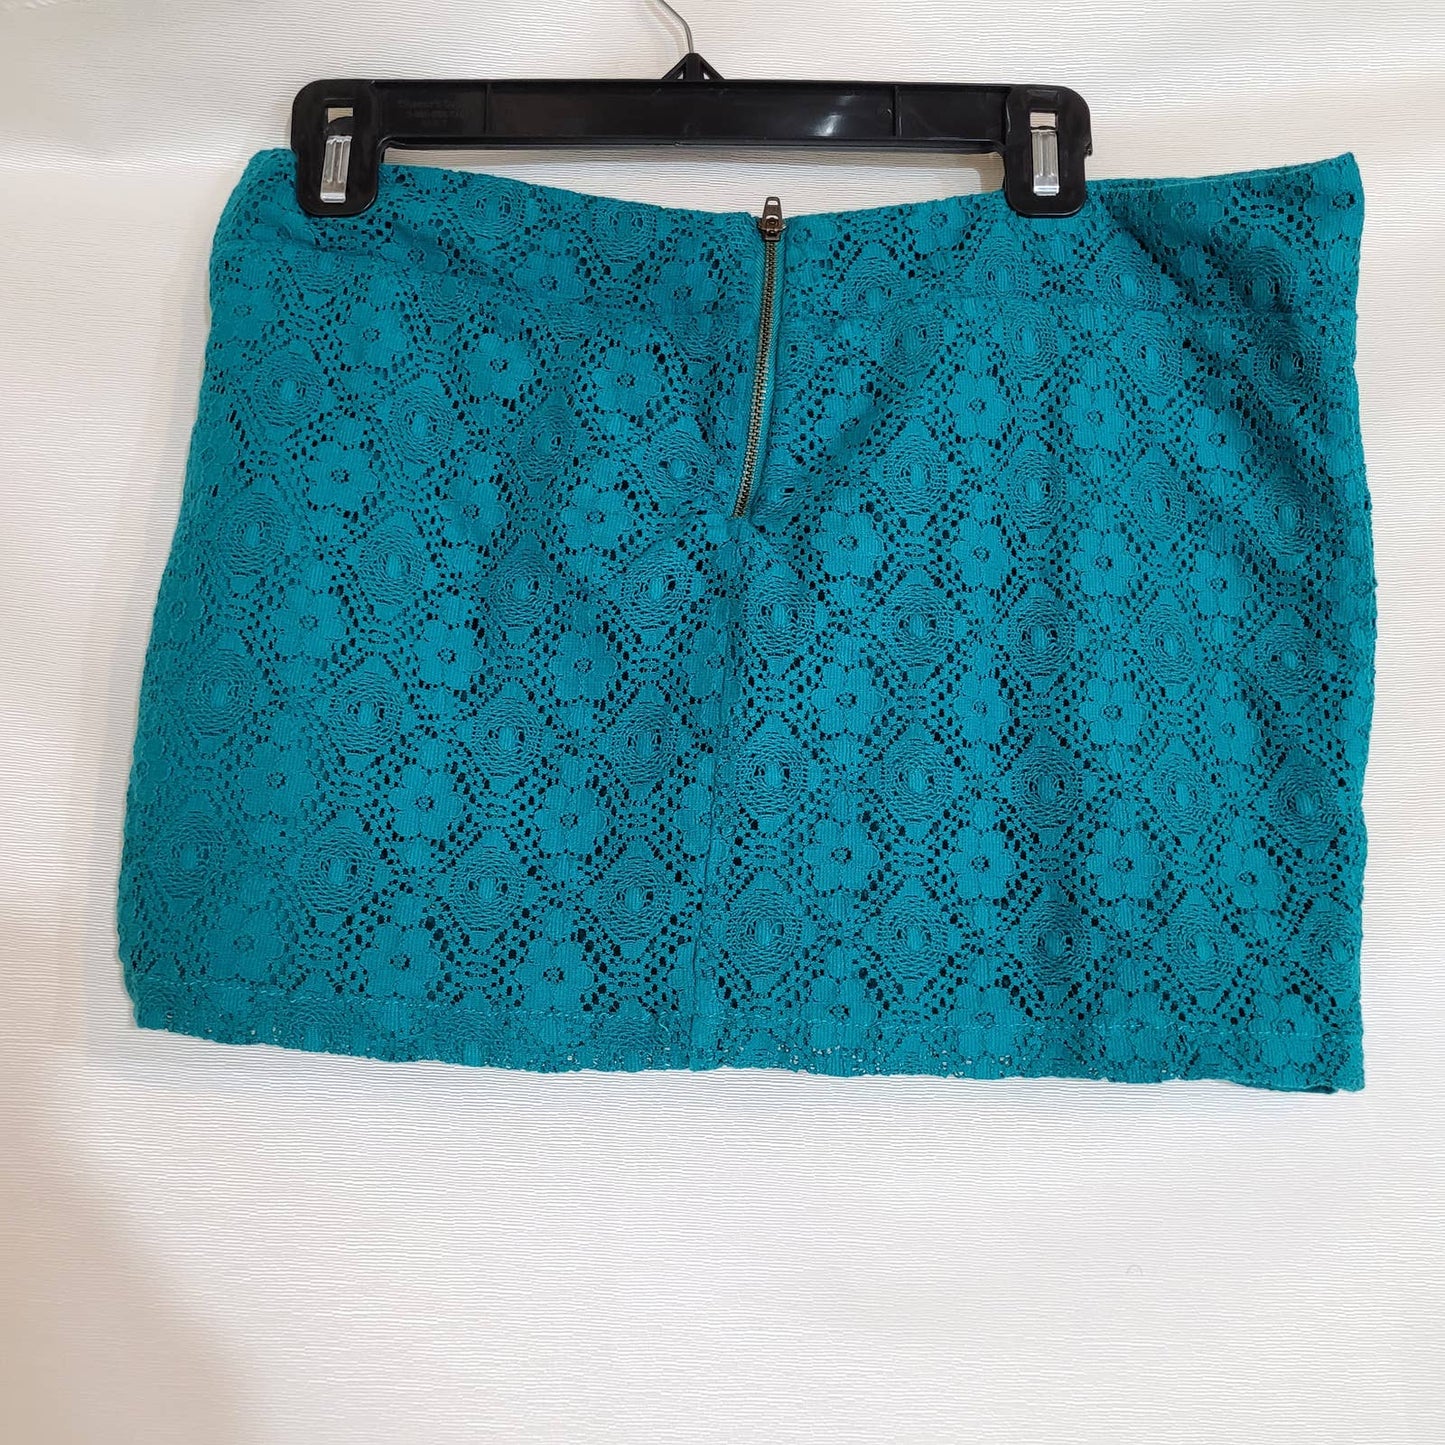 Volcom Green Turquoise Lace Mini Skirt - Size 9Markita's ClosetVolcom